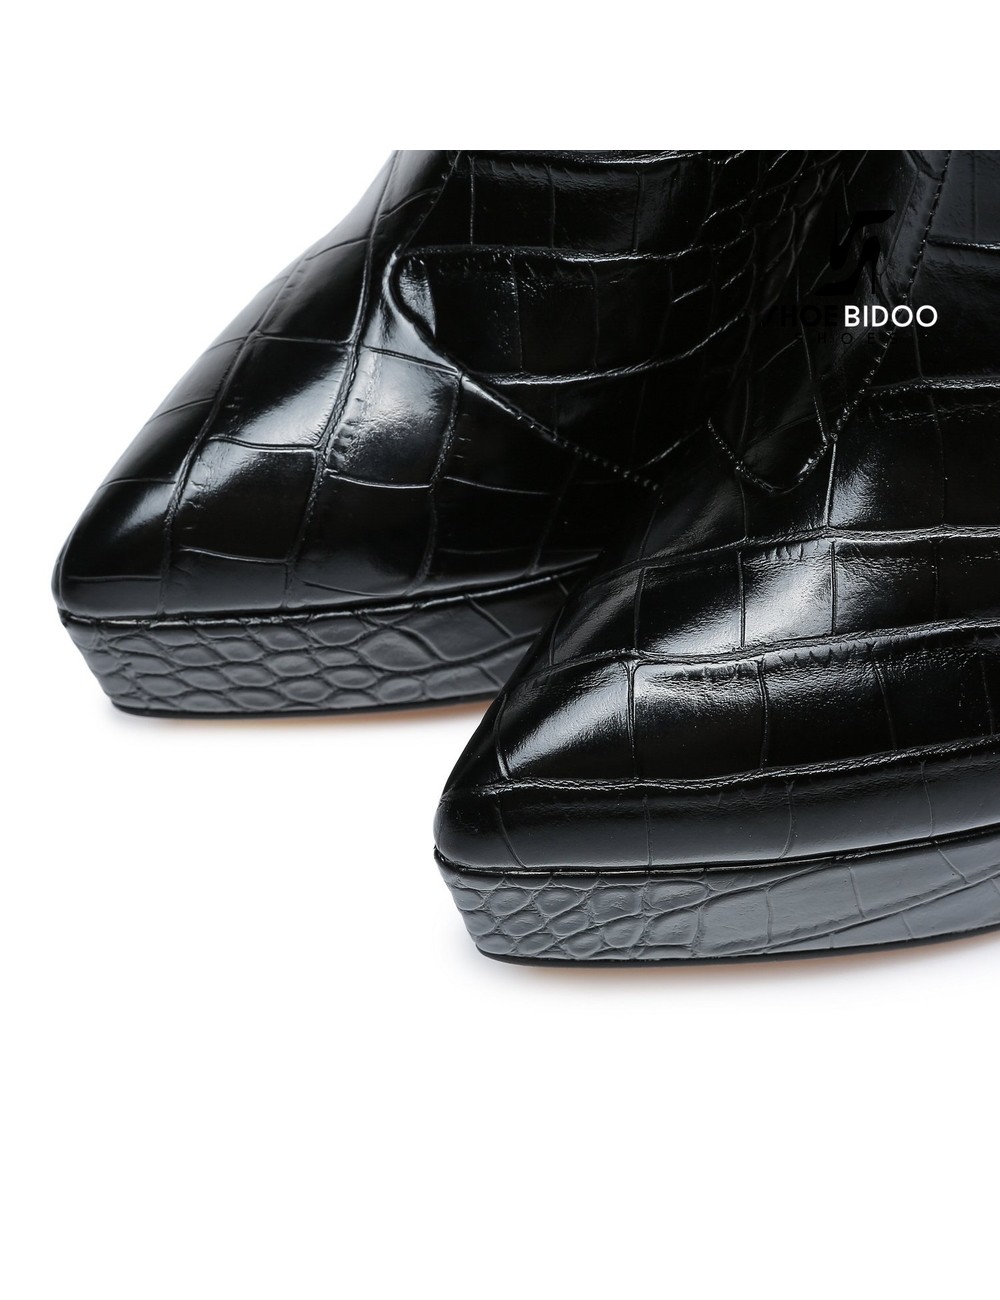 Giaro Giaro Platform Stiefeletten STACK in schwarz croc